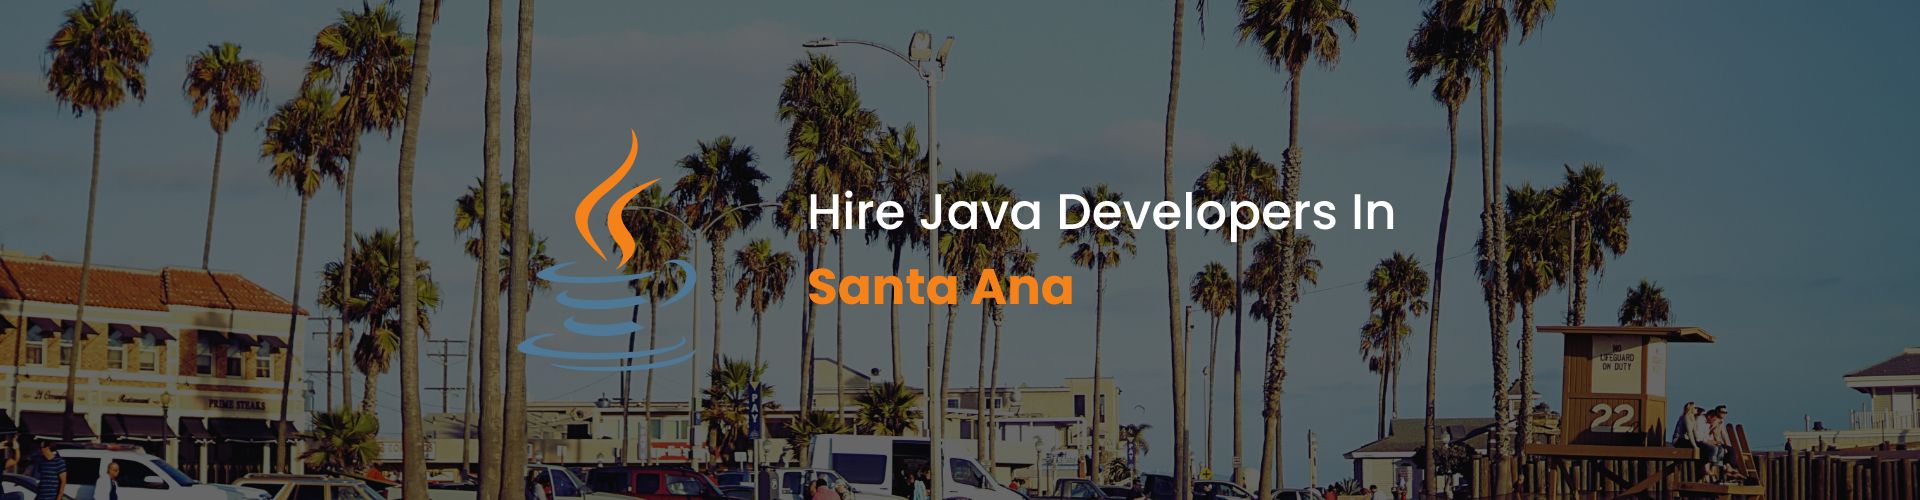 hire java developers in santa ana